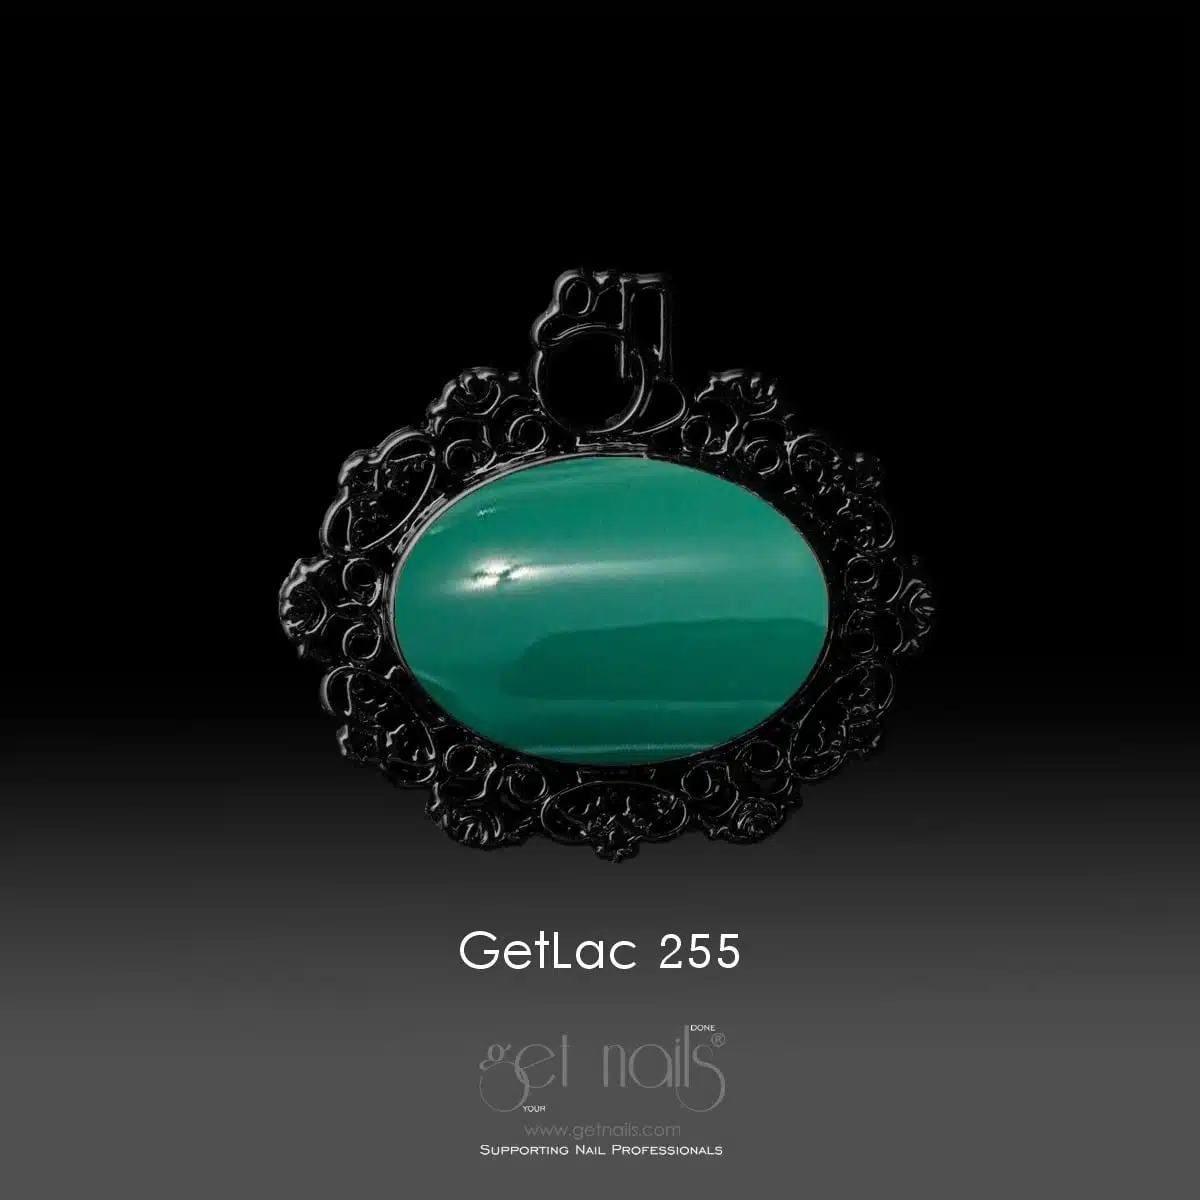 Get Nails Austria - GetLac 255 15г